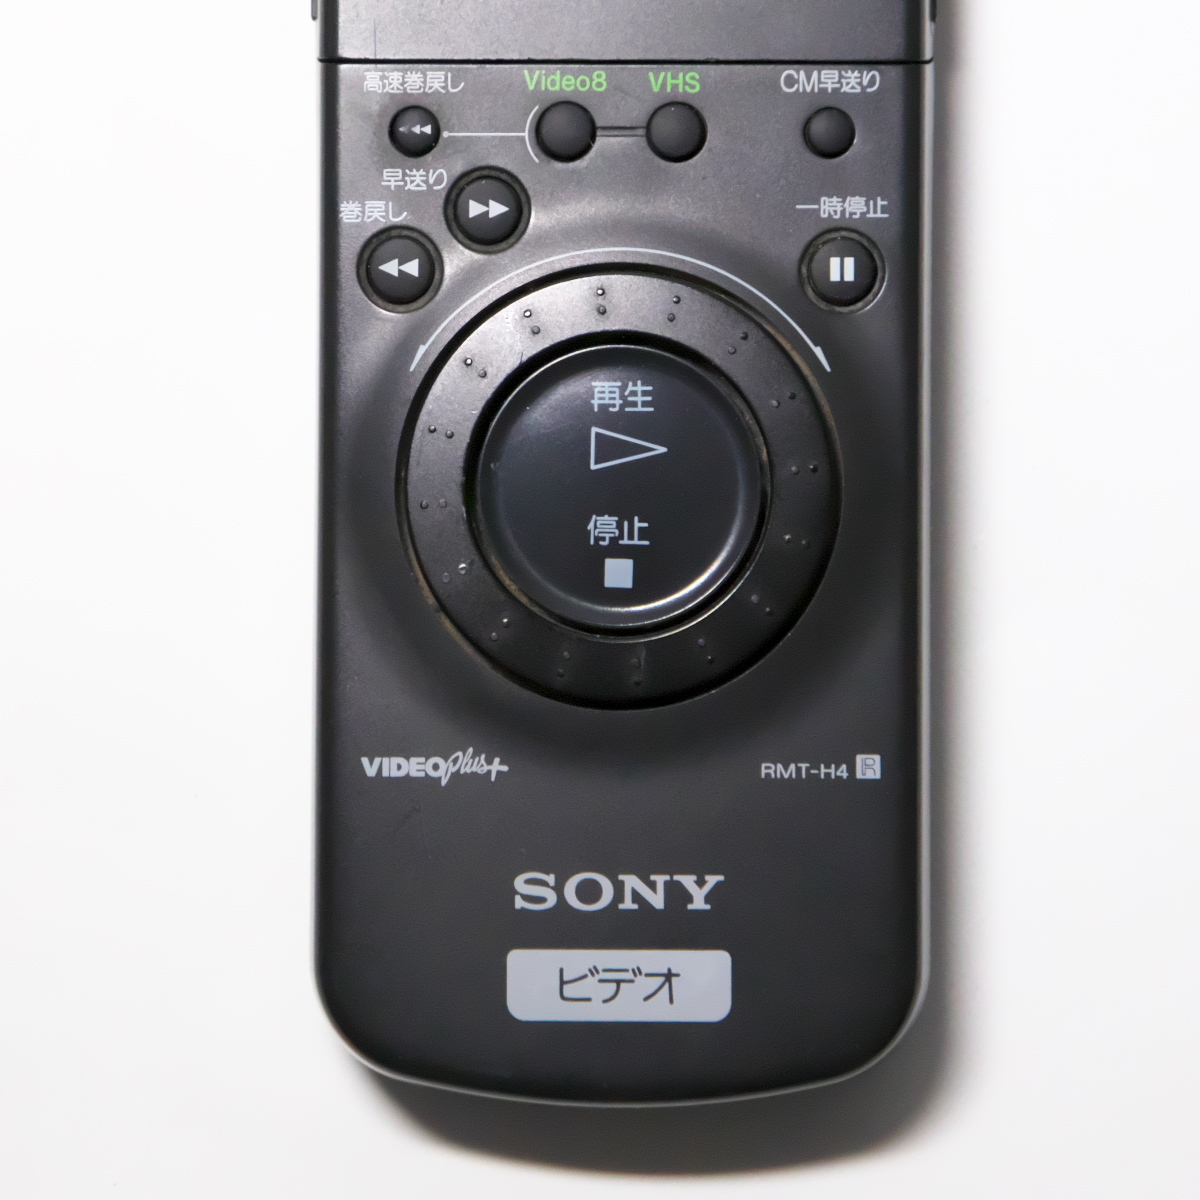 SONY Video8 VHS ダブルビデオ用 リモコン RMT-H4の画像4